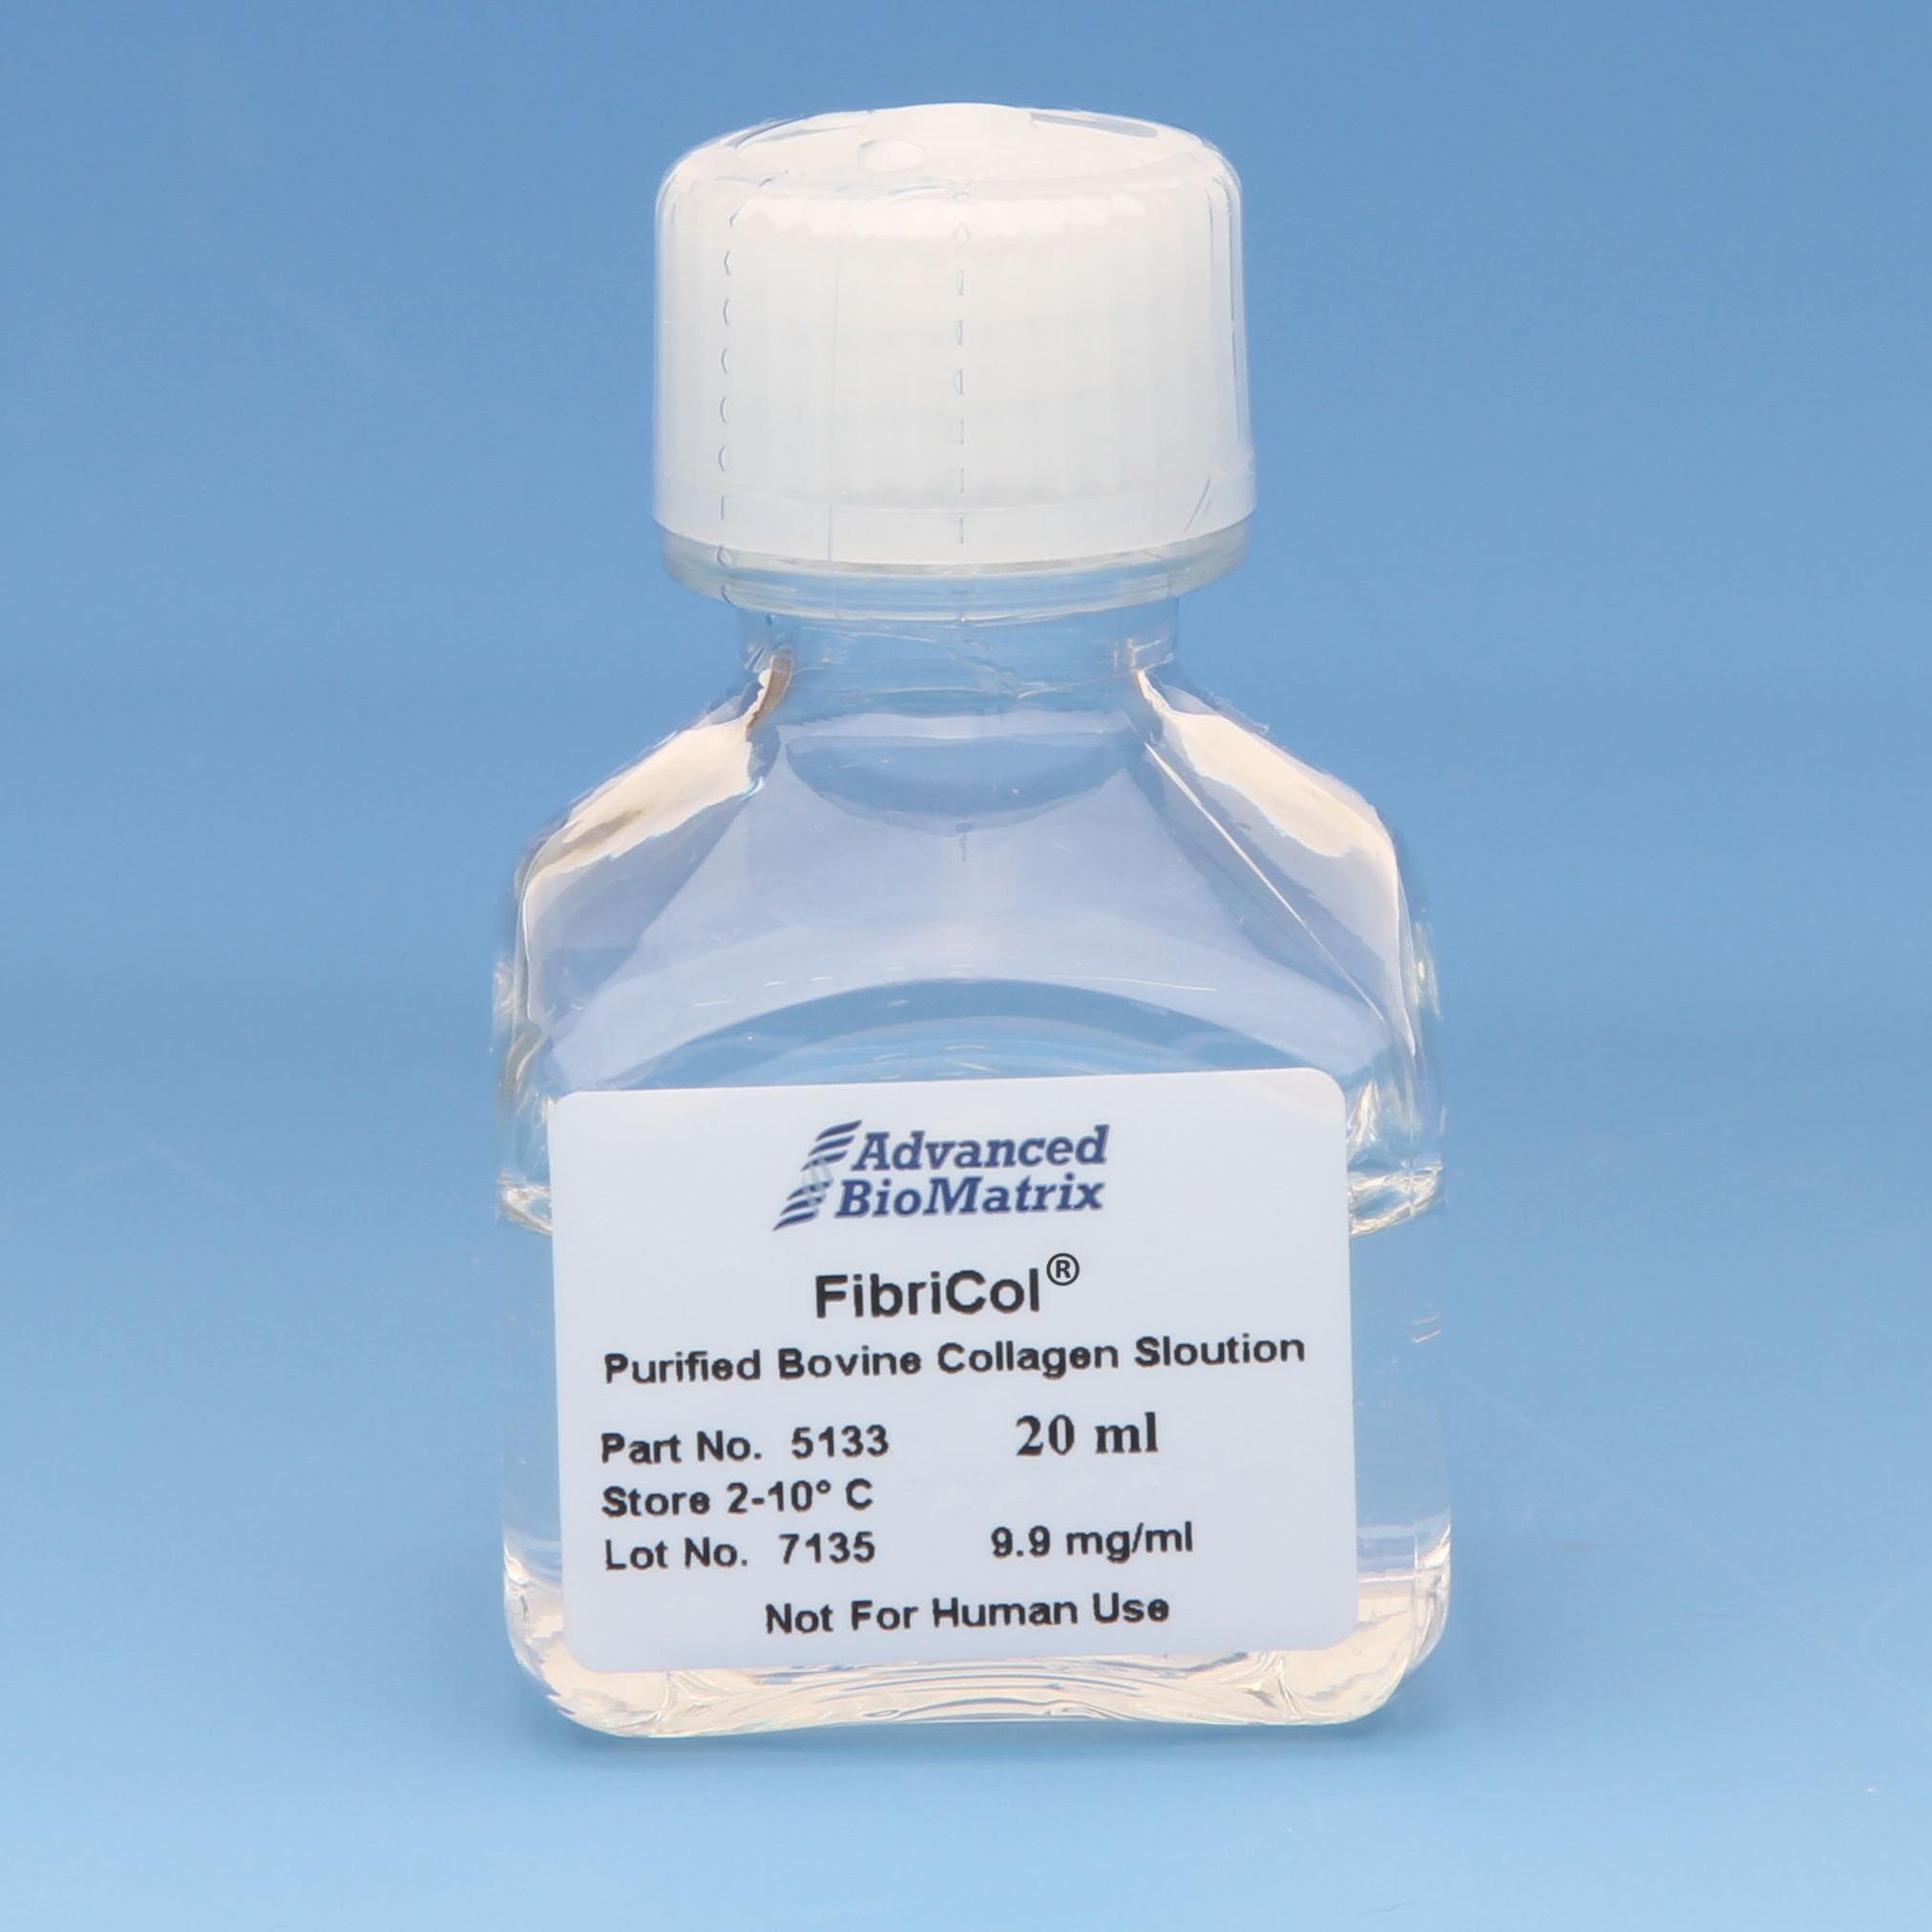 FibriCol type I collagen 10 mg/ml from Advanced BioMatrix